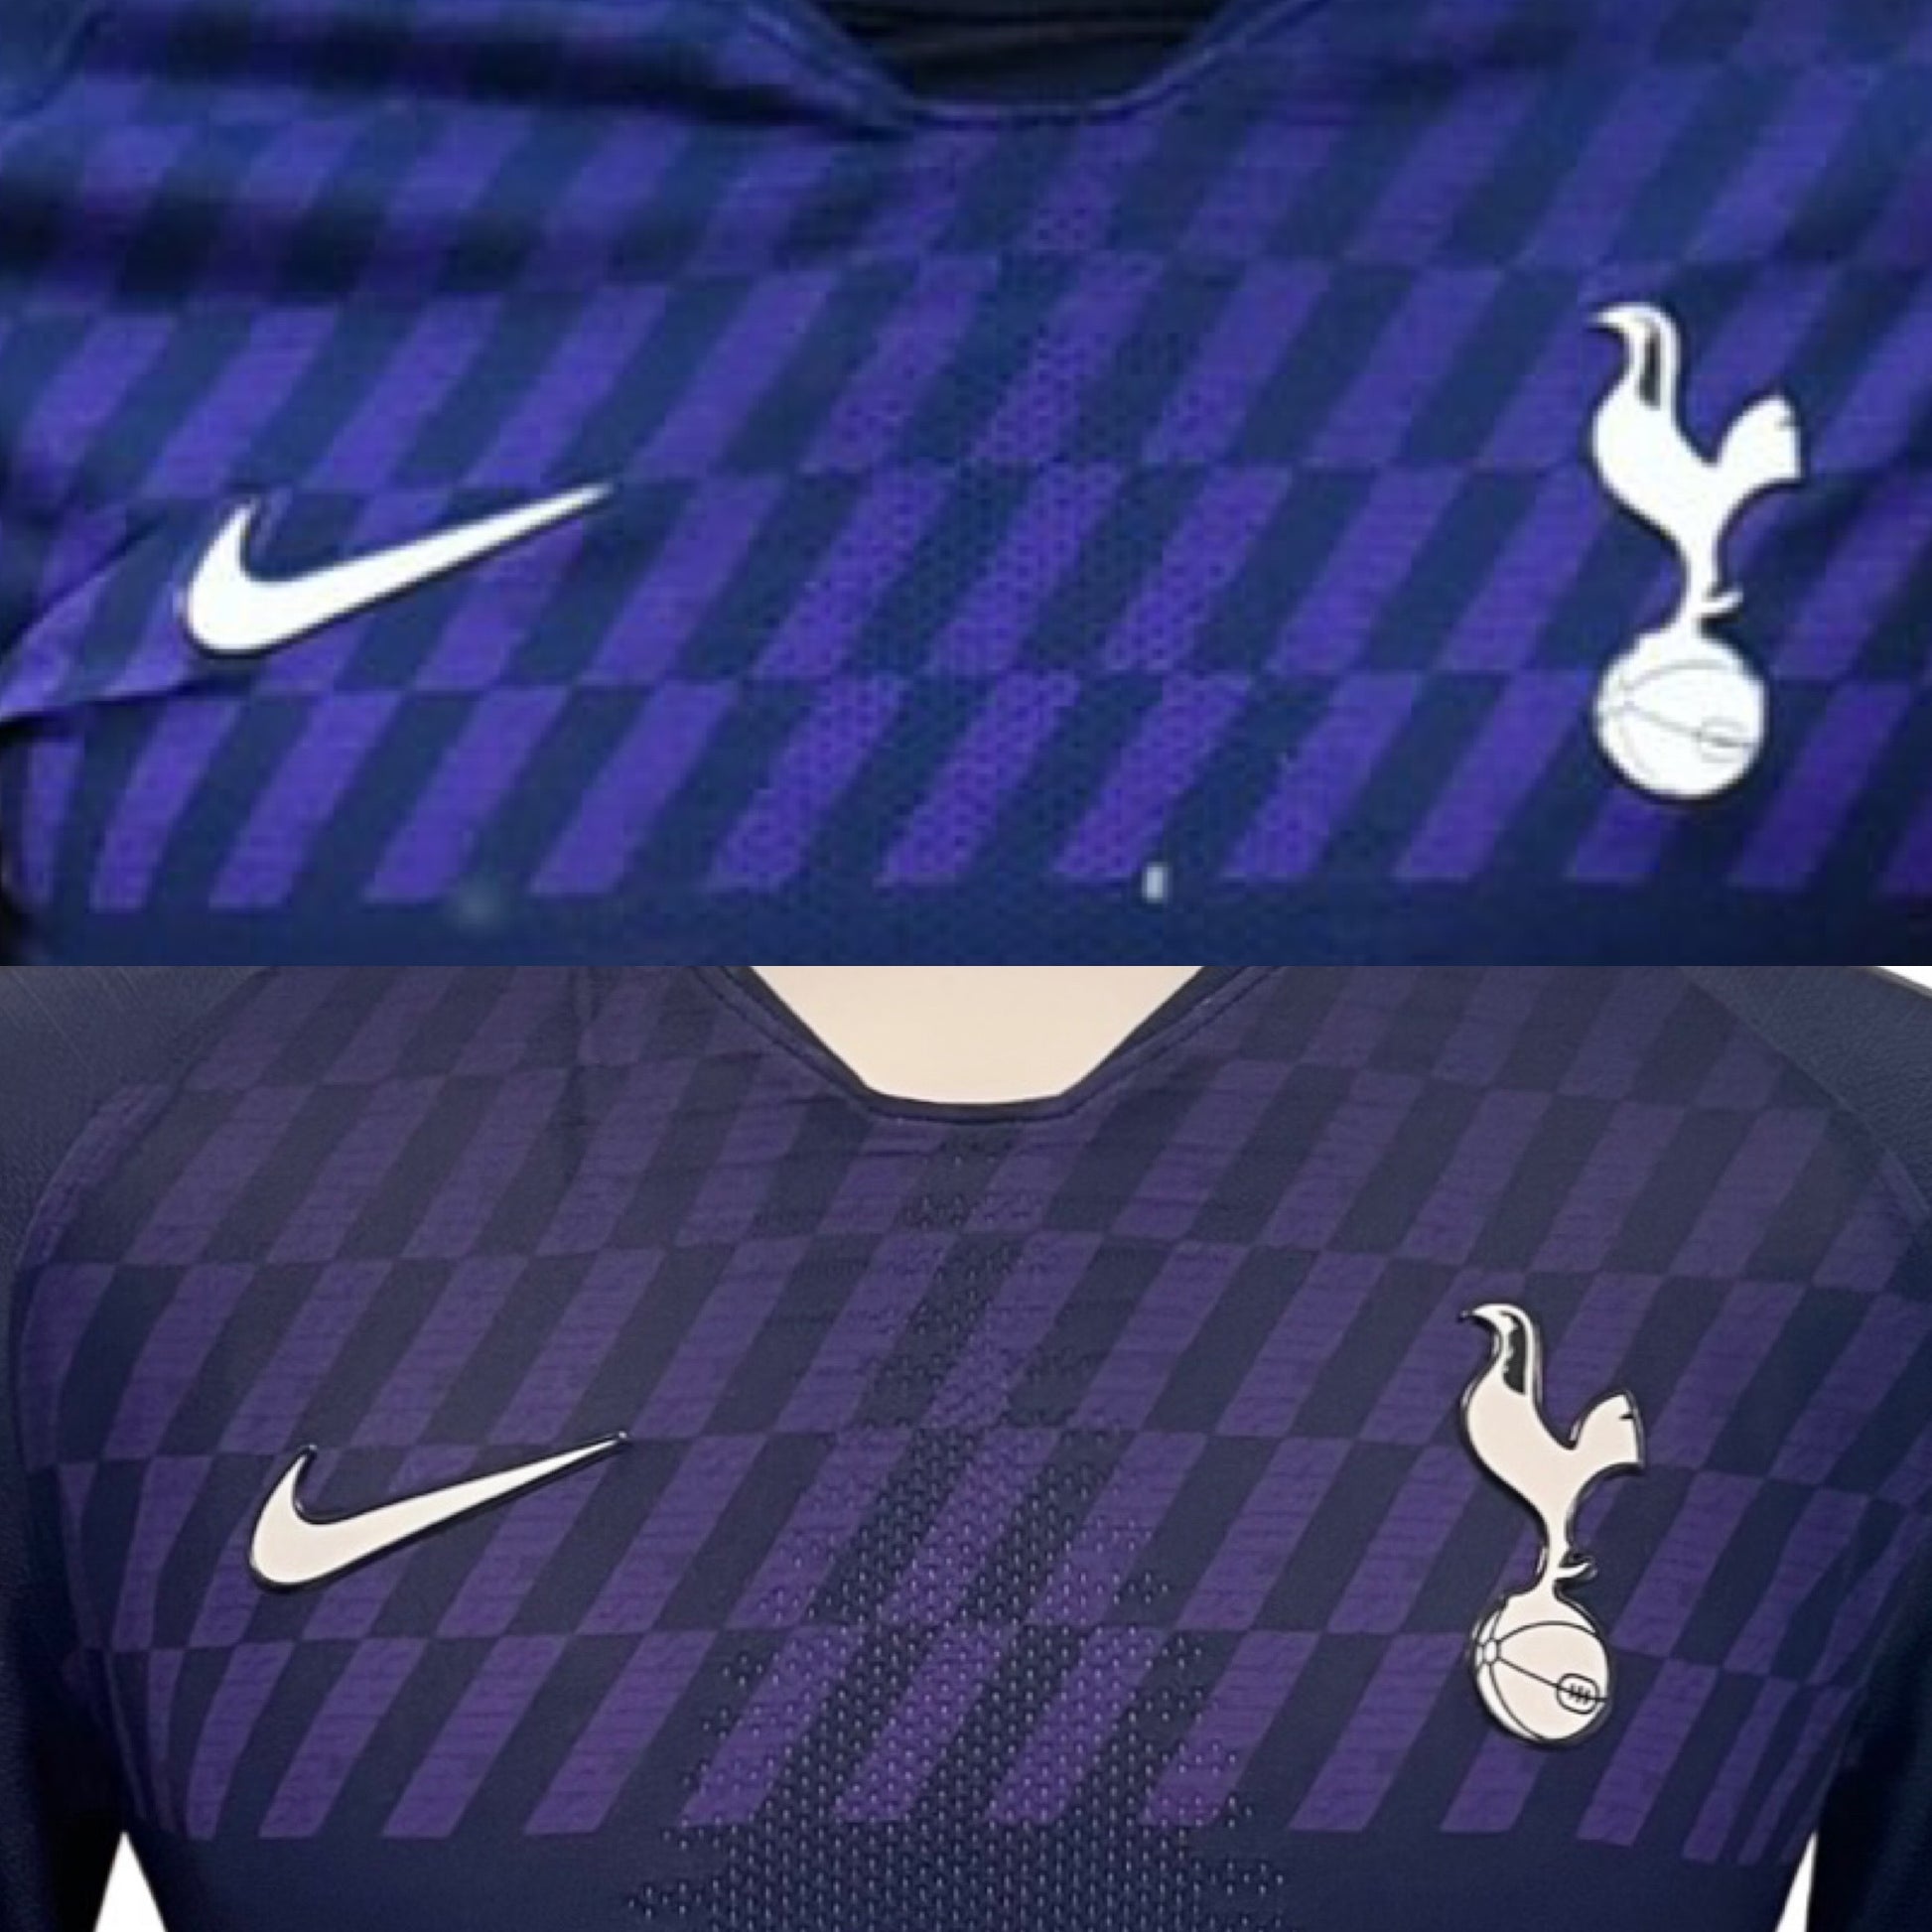 Son Heung-min Tottenham Hotspur Nike 2022/23 Third Authentic